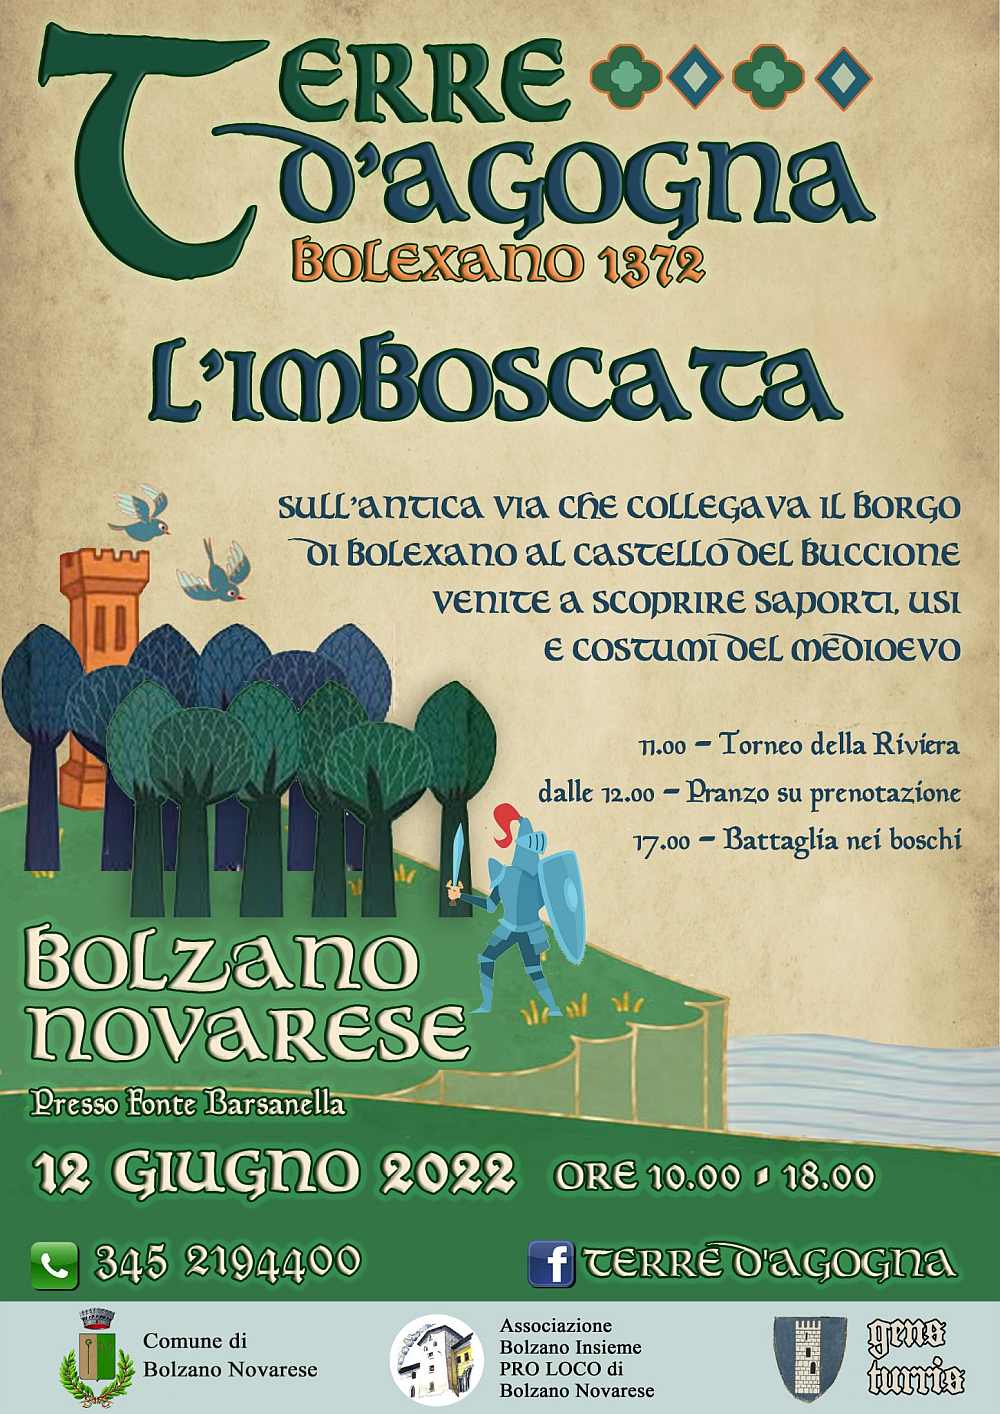 Bolzano Novarese (NO)
"Terre d'Agogna - Bolexano 1372 - L'Imboscata"
12 Giugno 2022